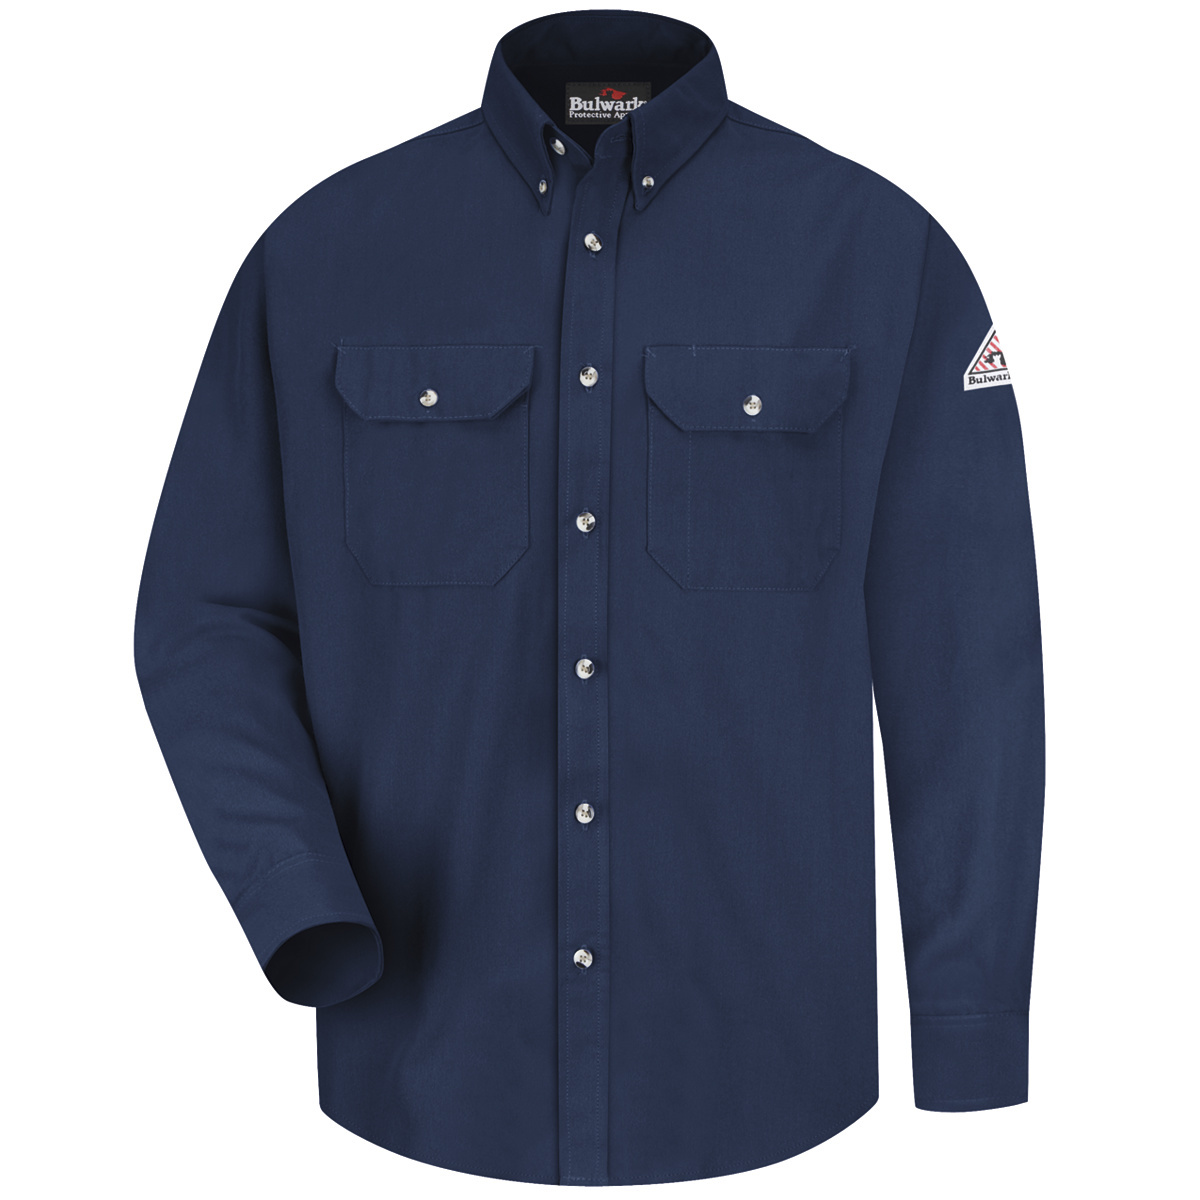 Bulwark® Medium Regular Navy Blue Modacrylic/Lyocell/Aramid Flame Resistant Dress Uniform Shirt With Button Front Closure